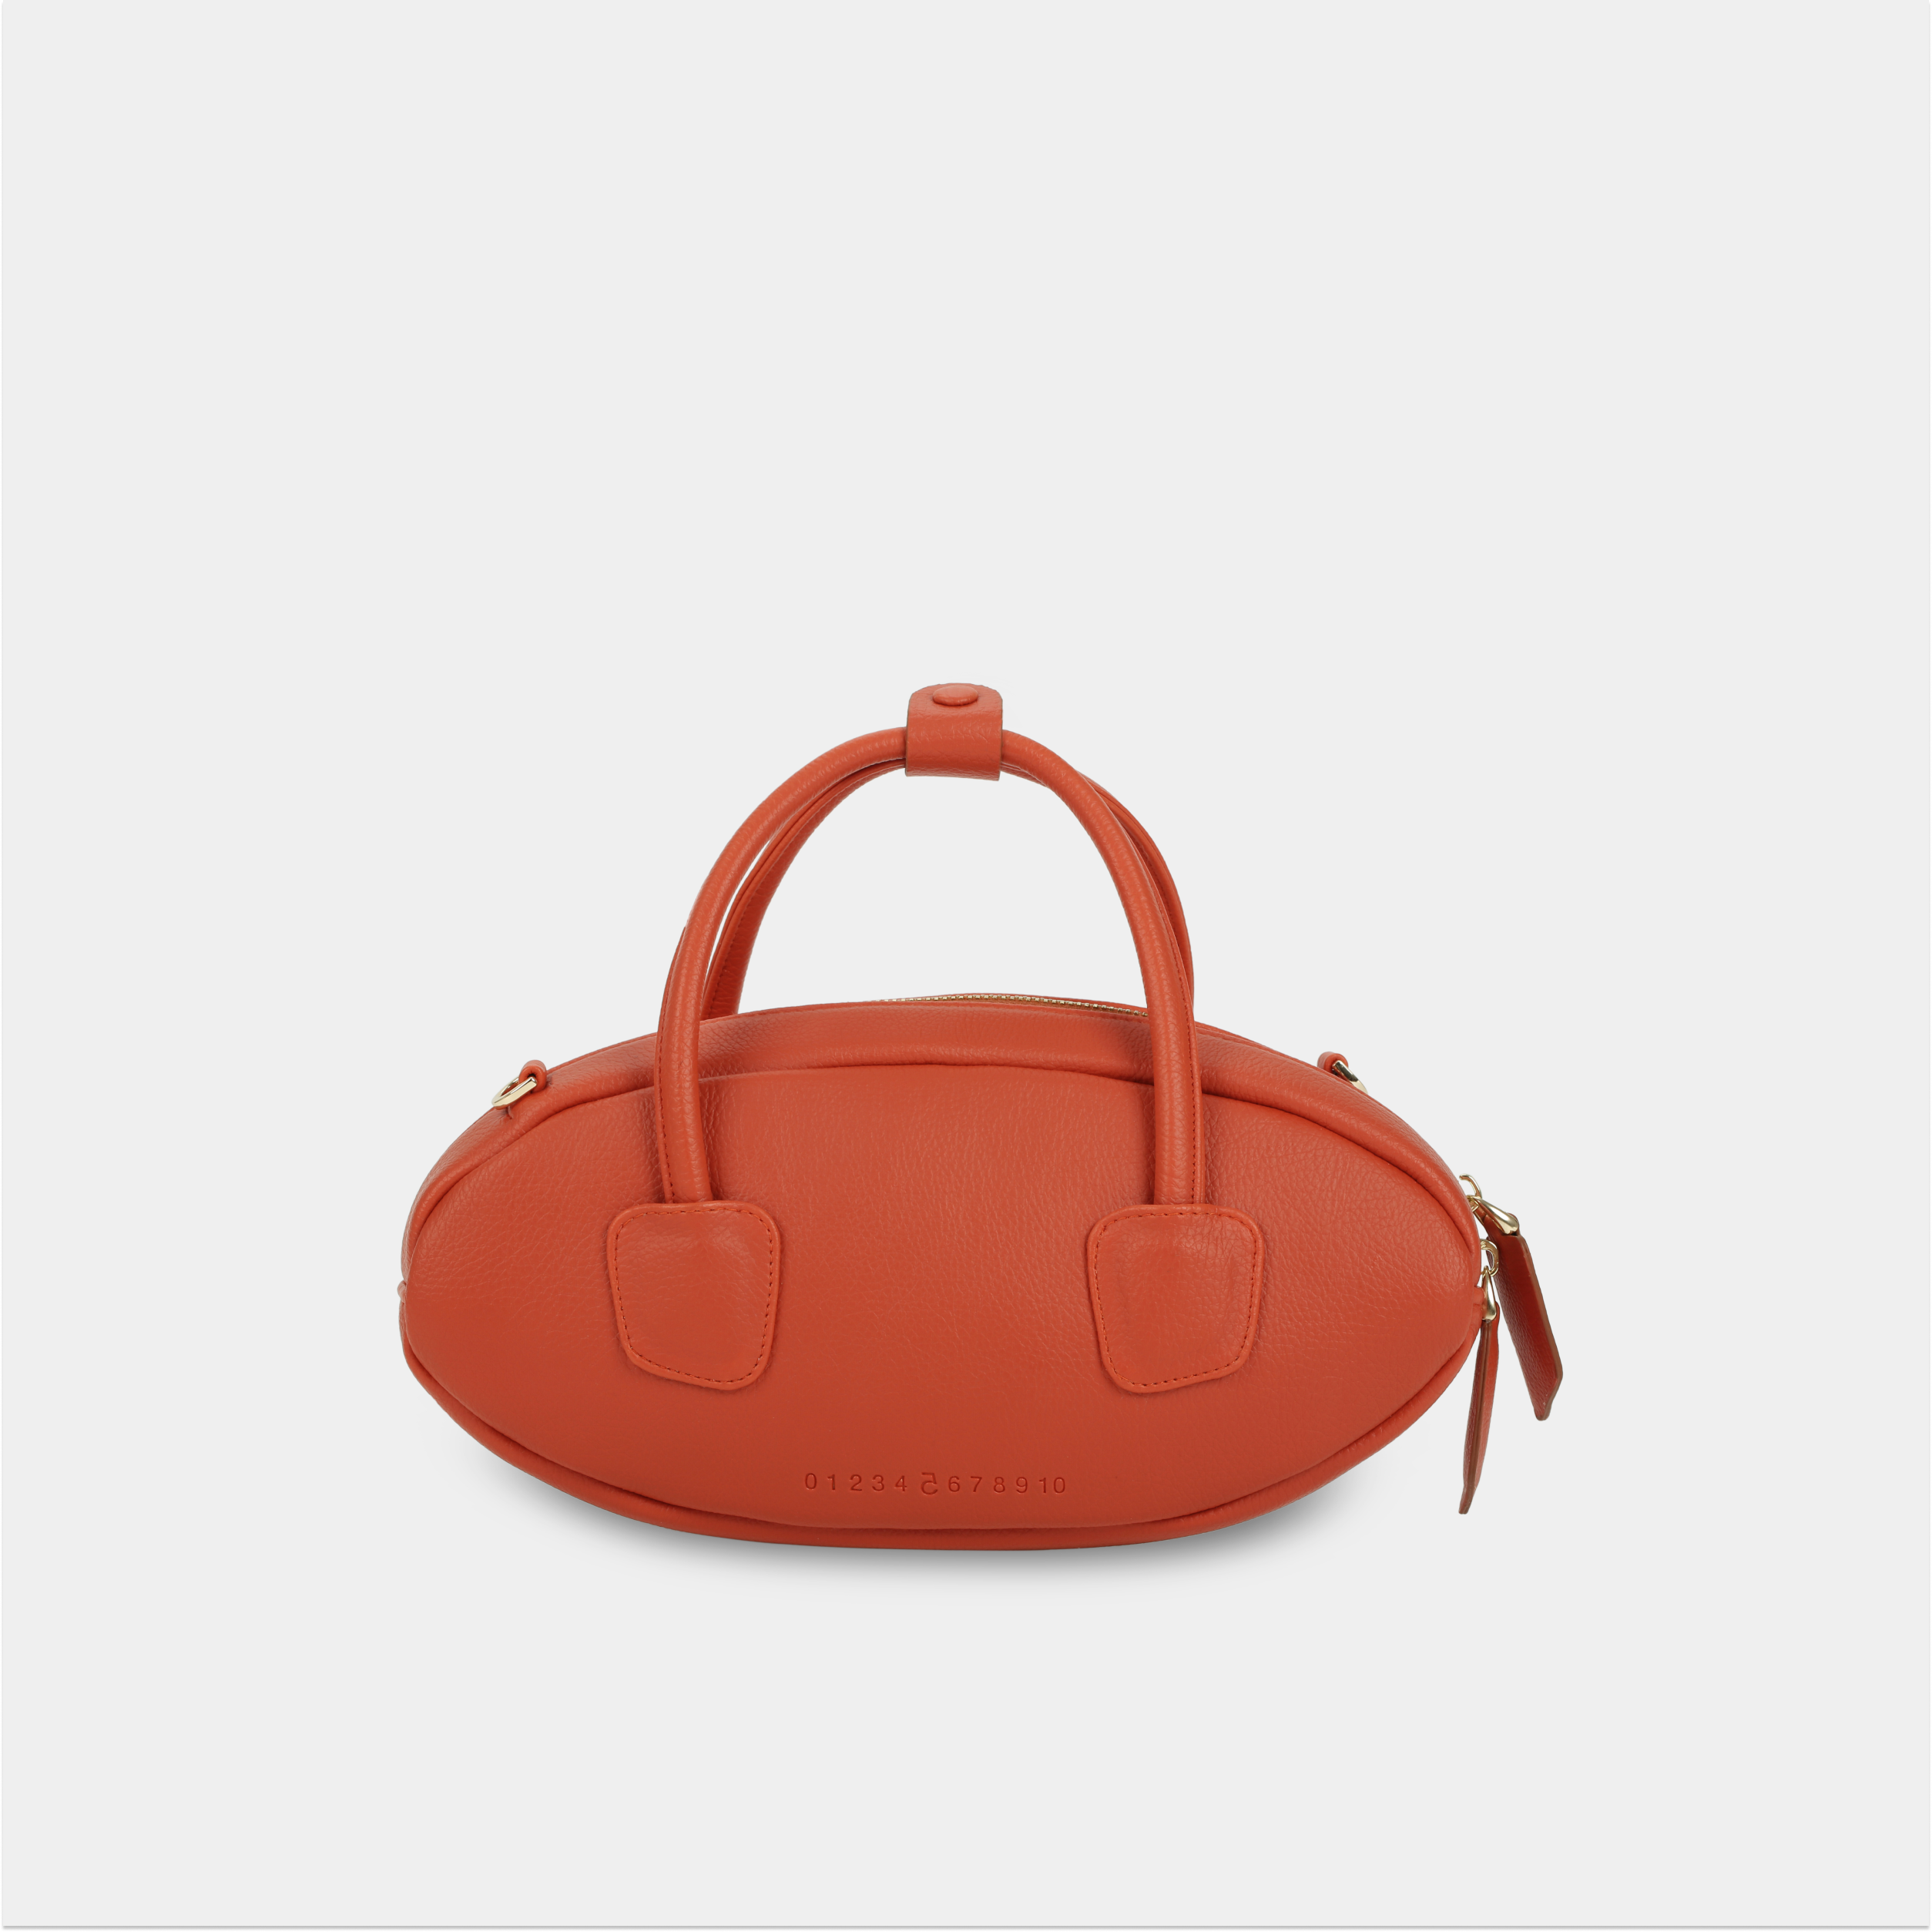 Red orange EGG handbag